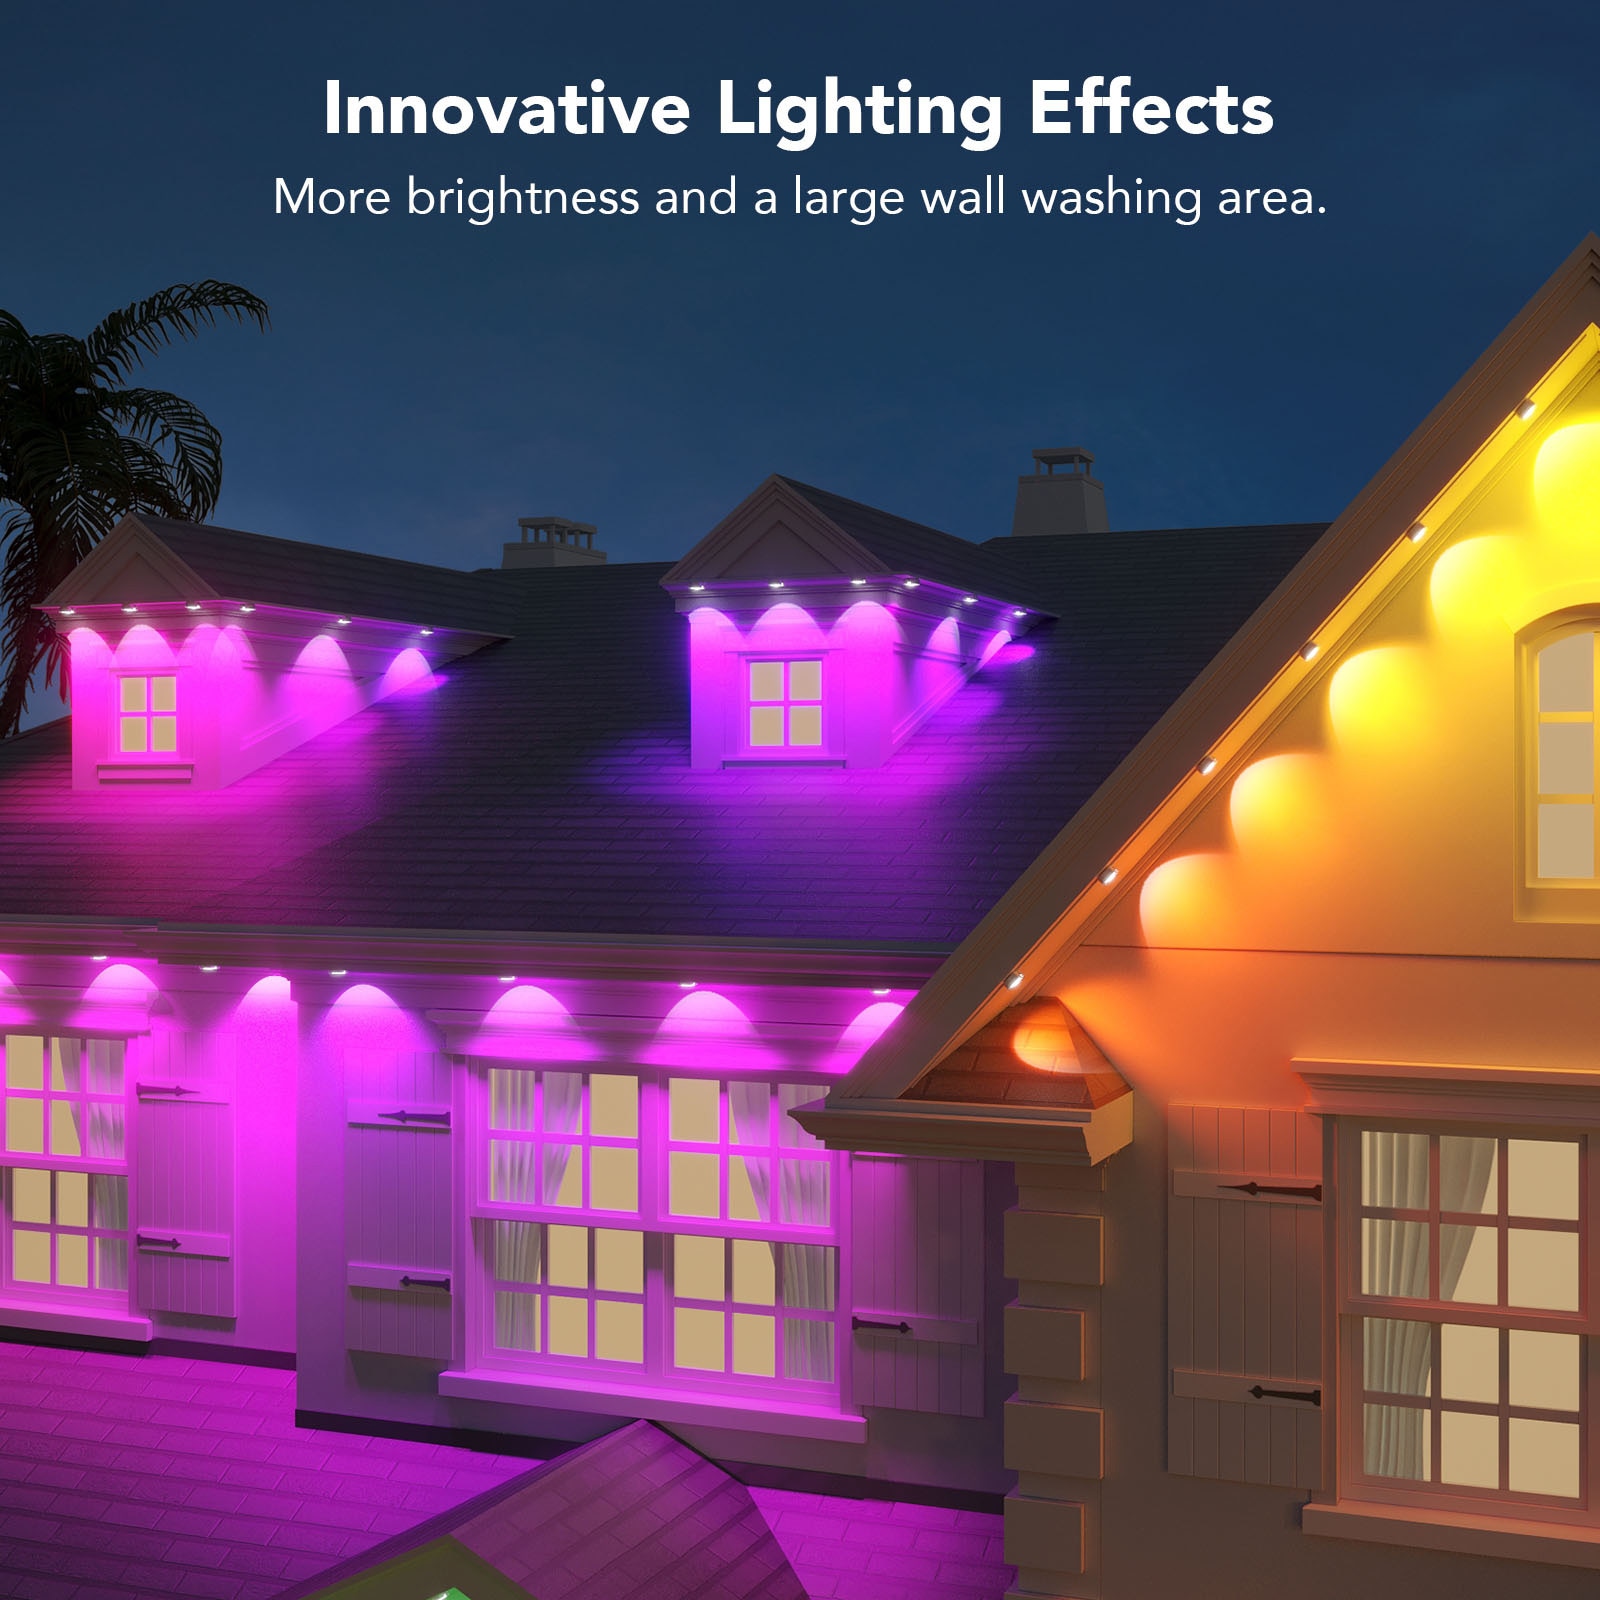 The best LED landscape lighting kits for 2023